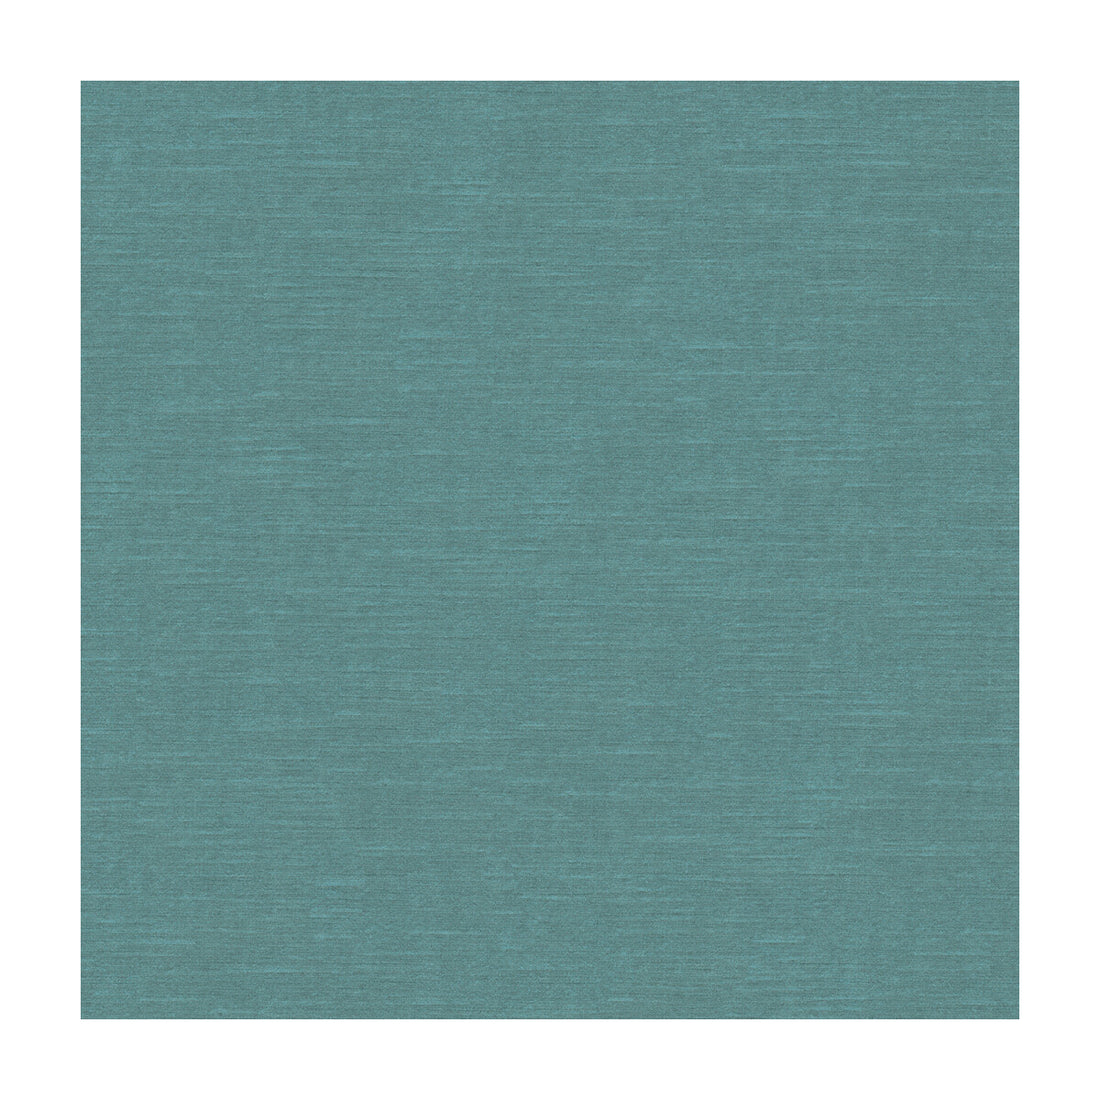 Venetian fabric in turq color - pattern 31326.35.0 - by Kravet Design